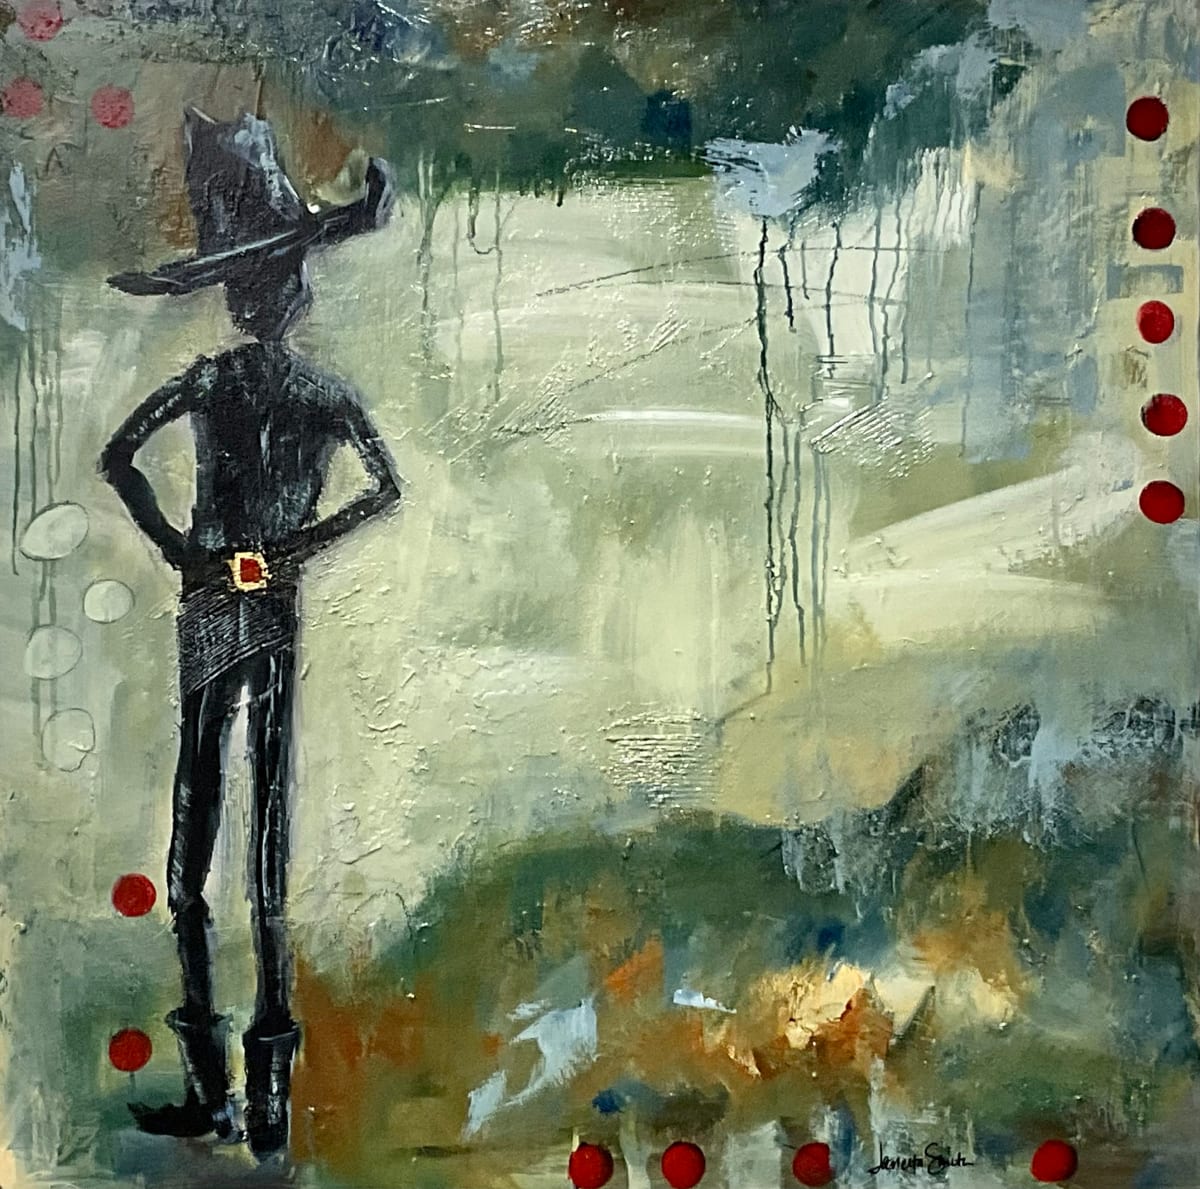 Rainstorm at Dusk by Janetta Smith  Image: Skinny Cowboy Series - Janetta Smith Art